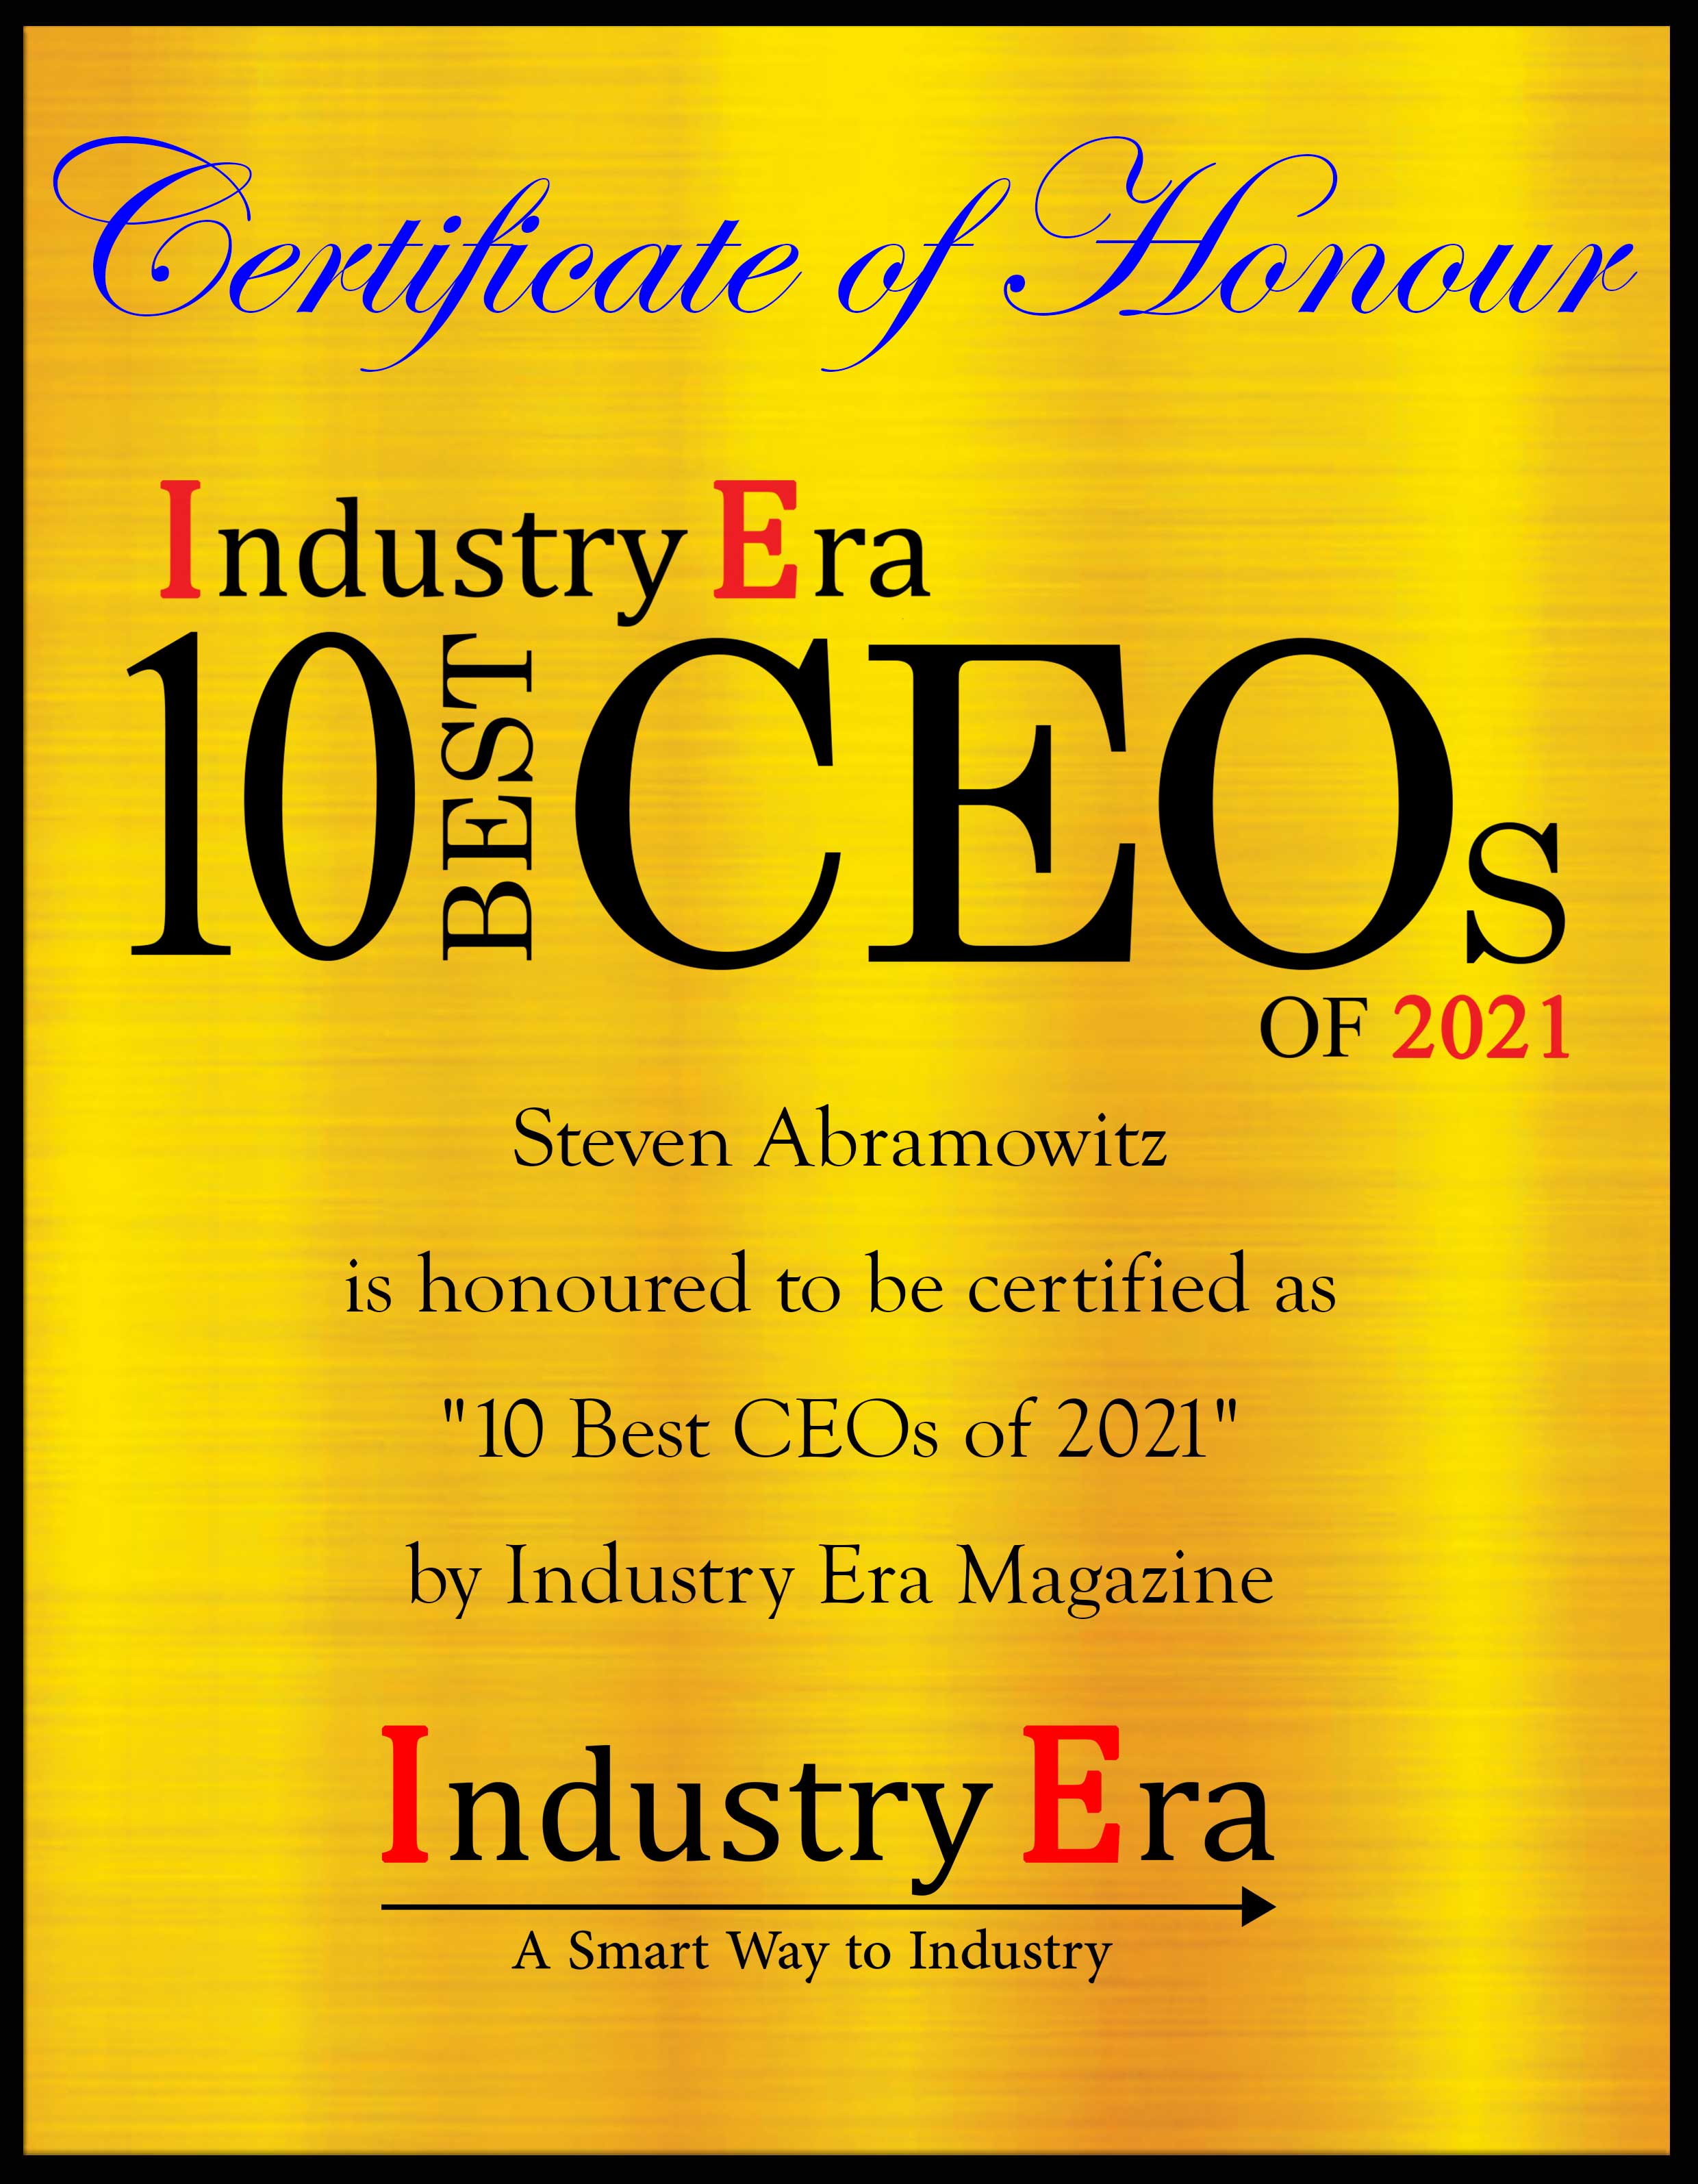 Steven Abramowitz CEO of Boardroom Certificate